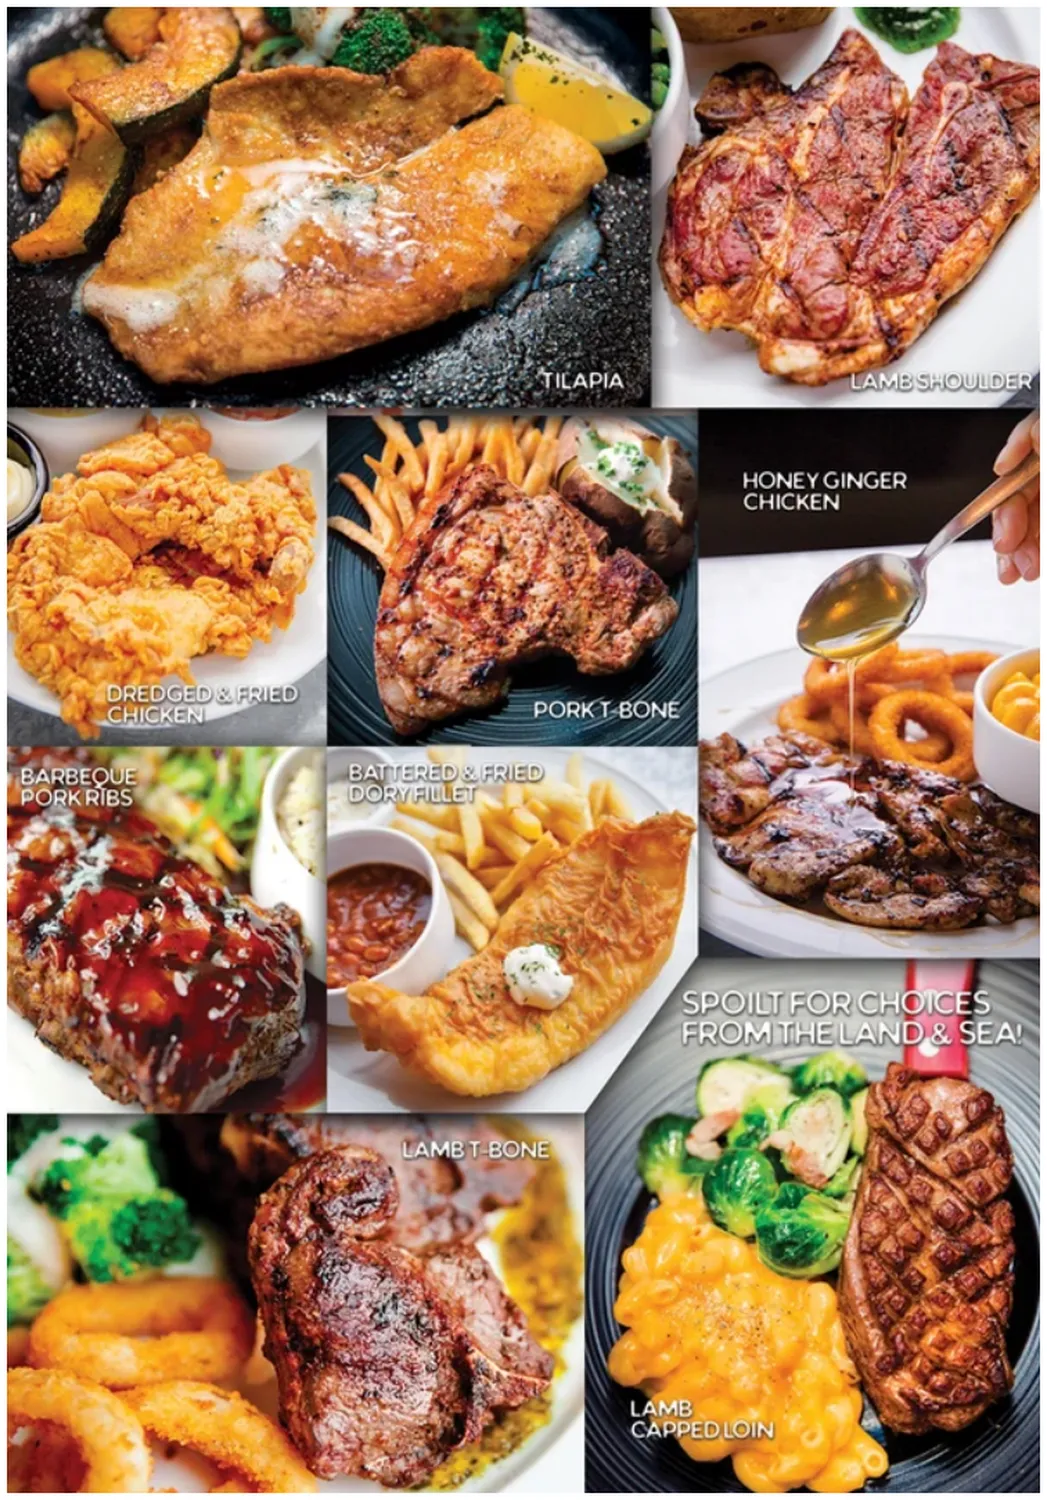 iSTEAK menu singapore grills griddles golden fried